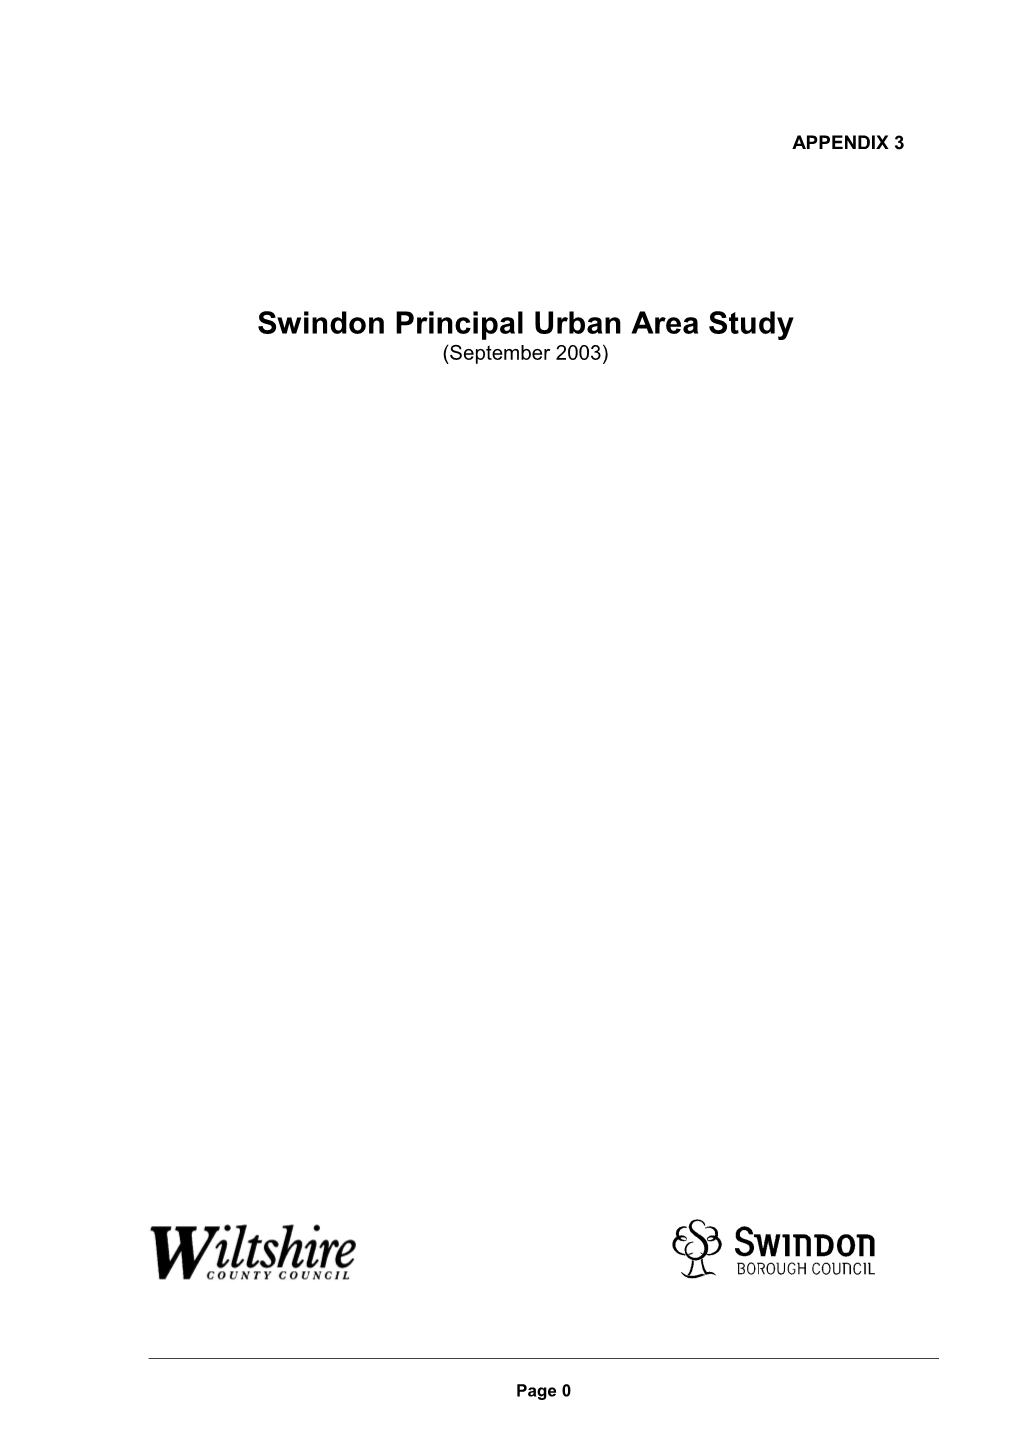 Swindon Principal Urban Area Study (September 2003)